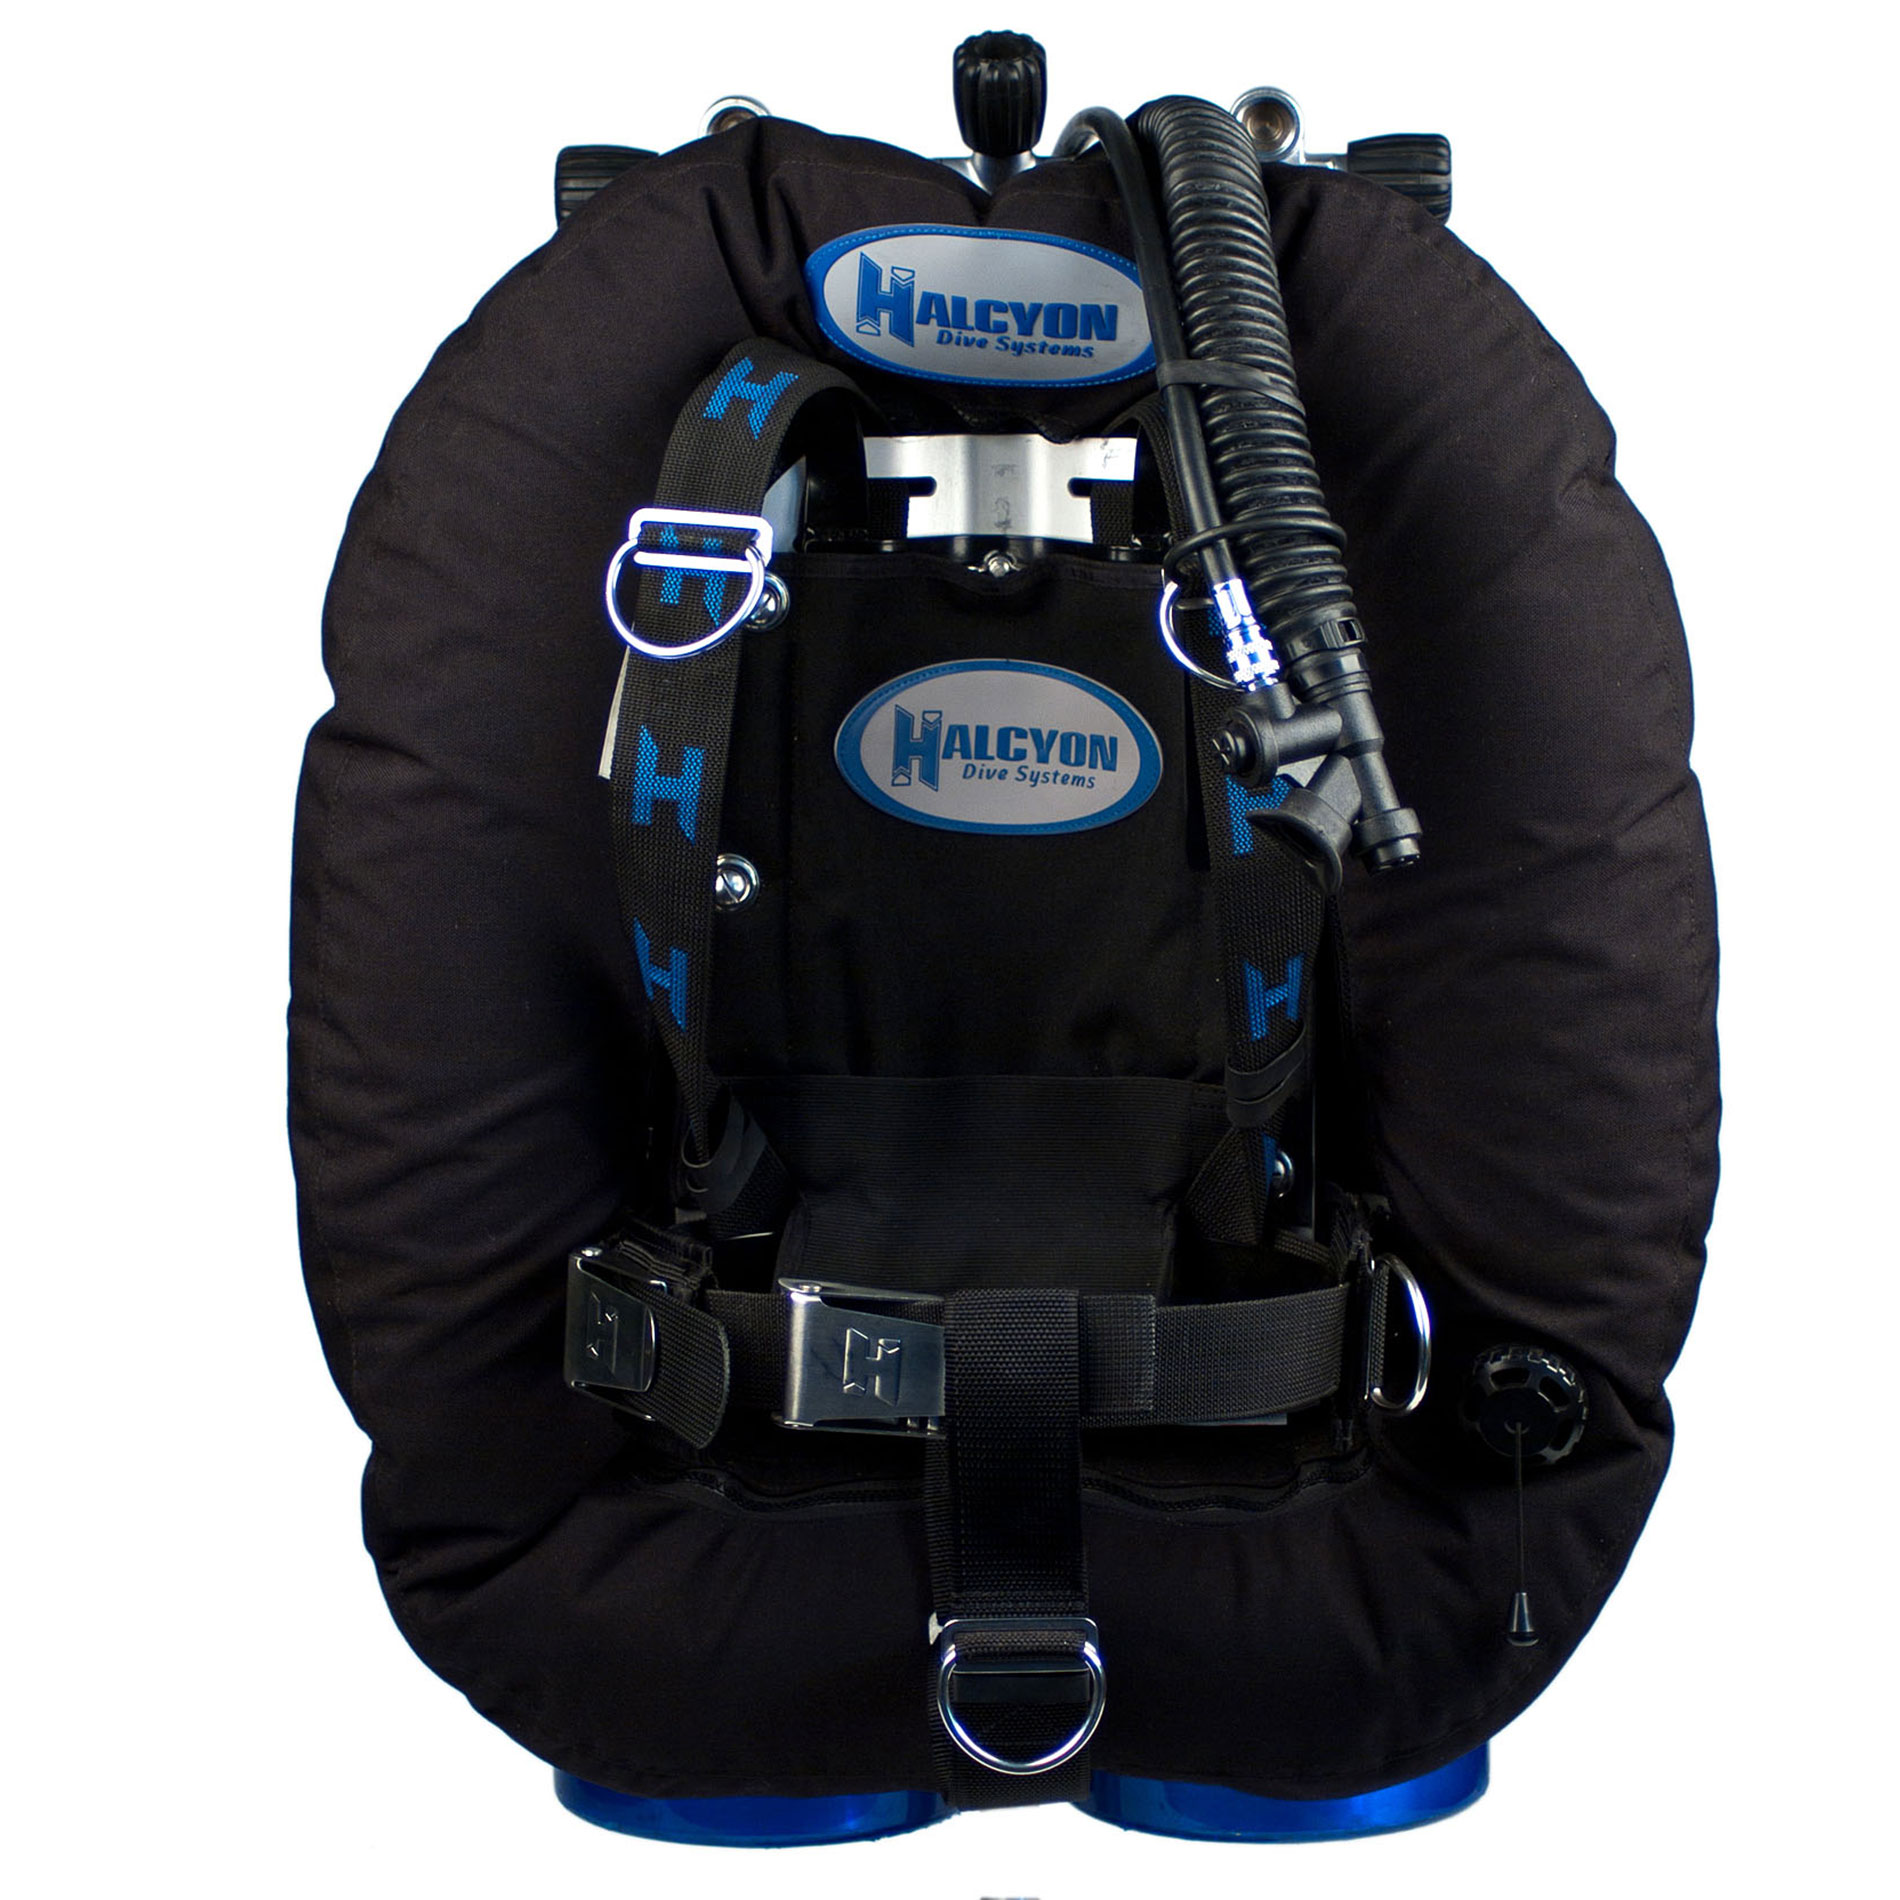 buy halcyon dive gear online